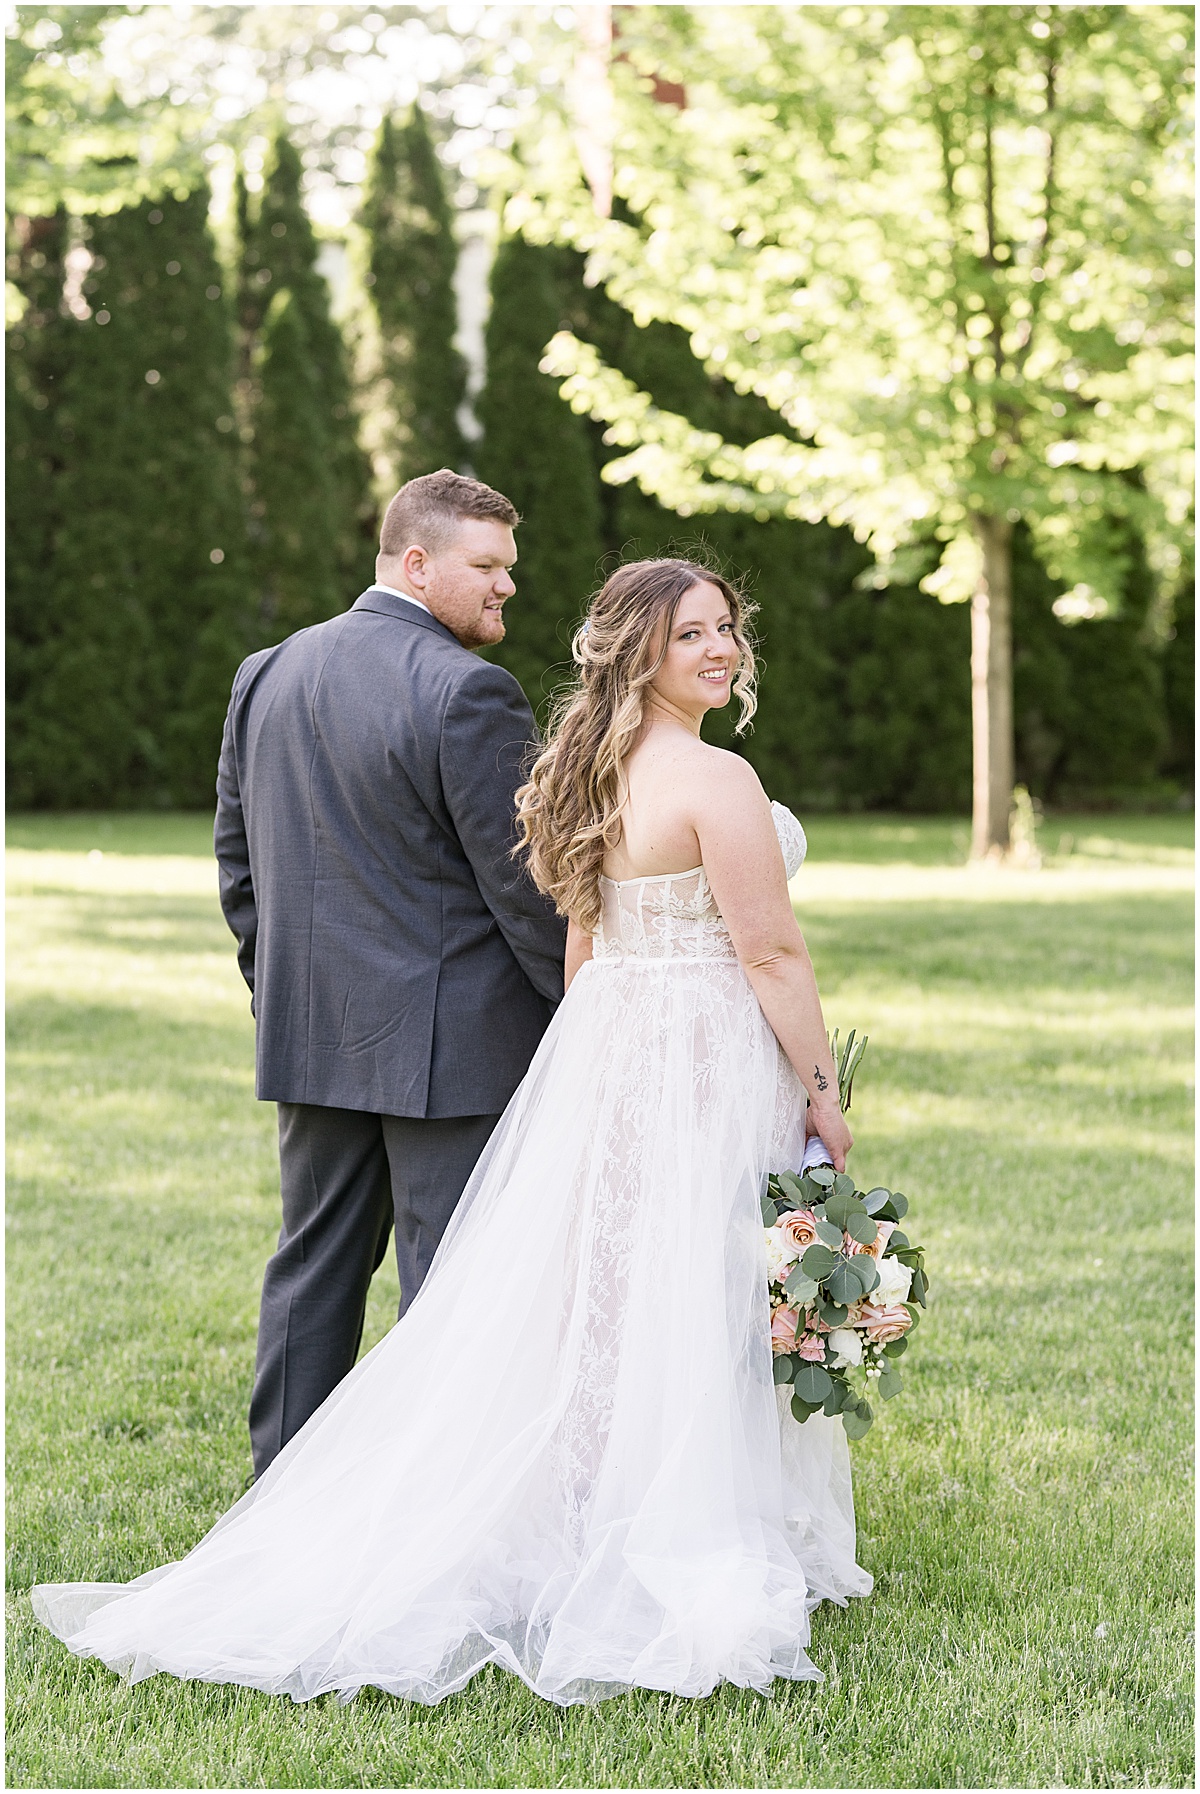 Bride and groom walk together at Potawatomi Park in Rensselaer, Indiana